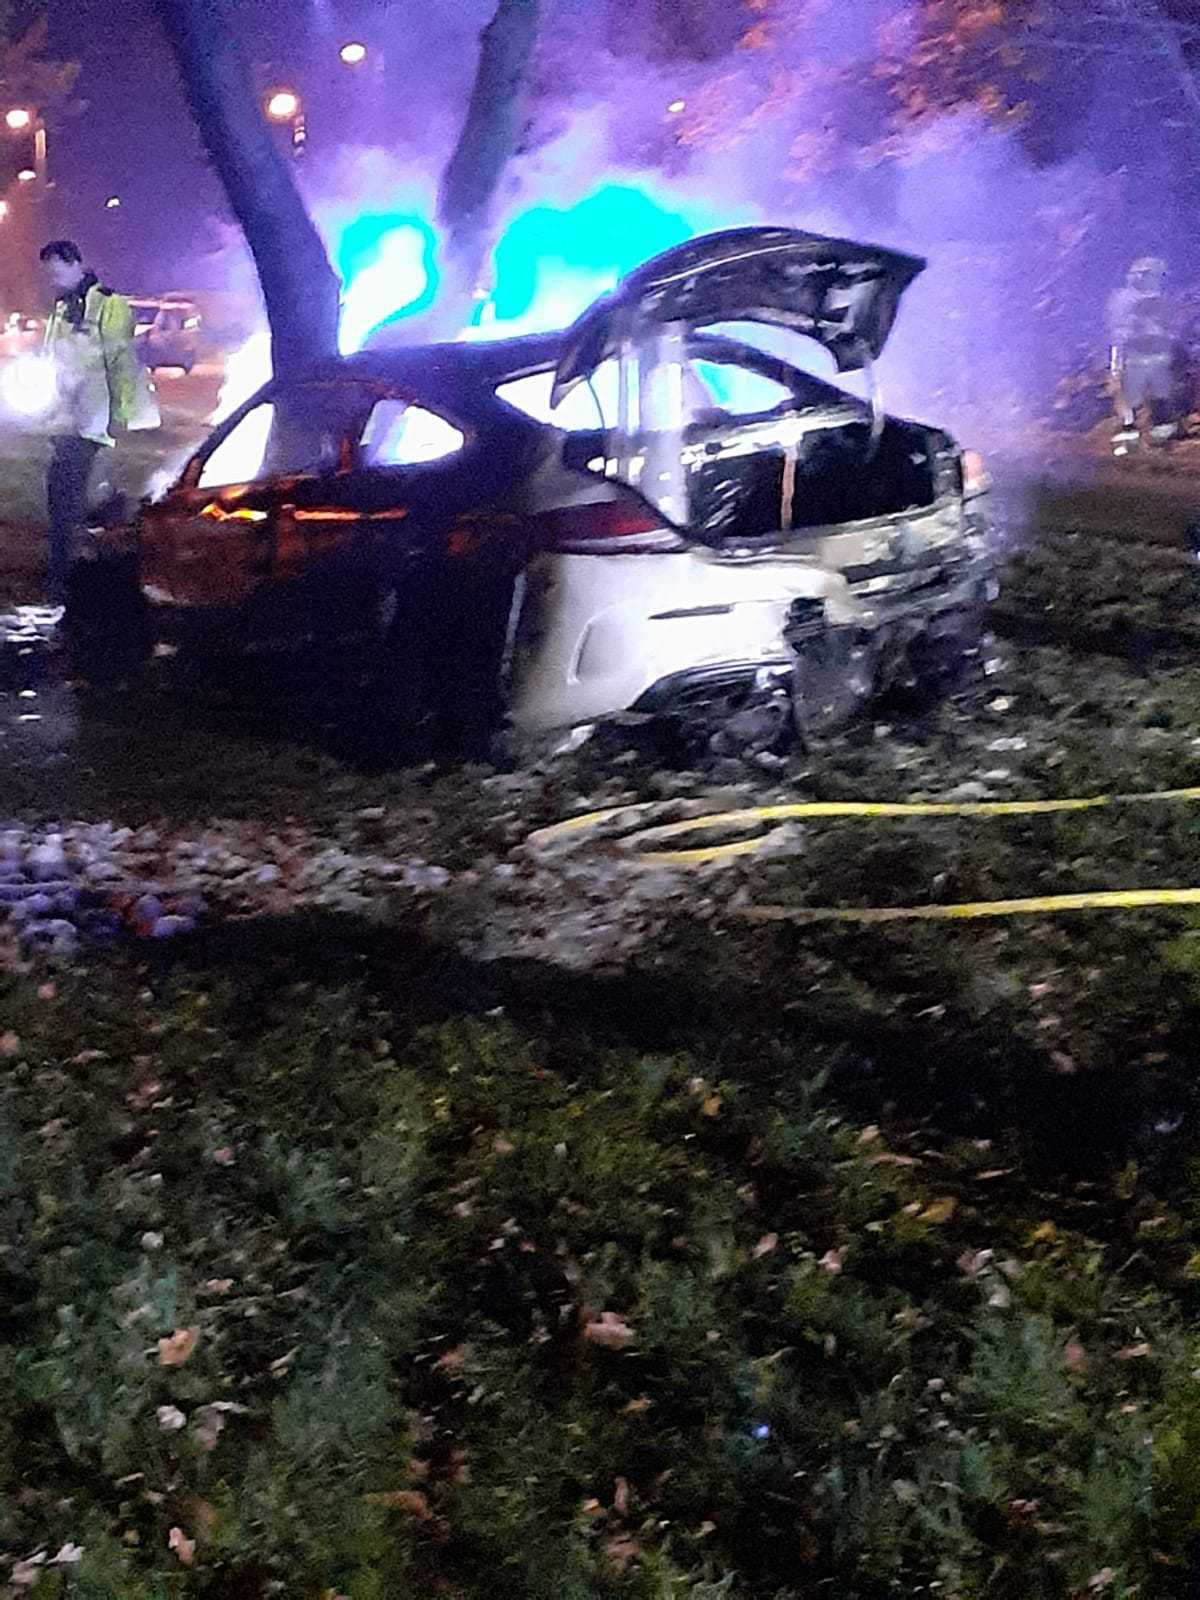 Car in flames after hitting tree in Shrewsbury crash | Shropshire Star